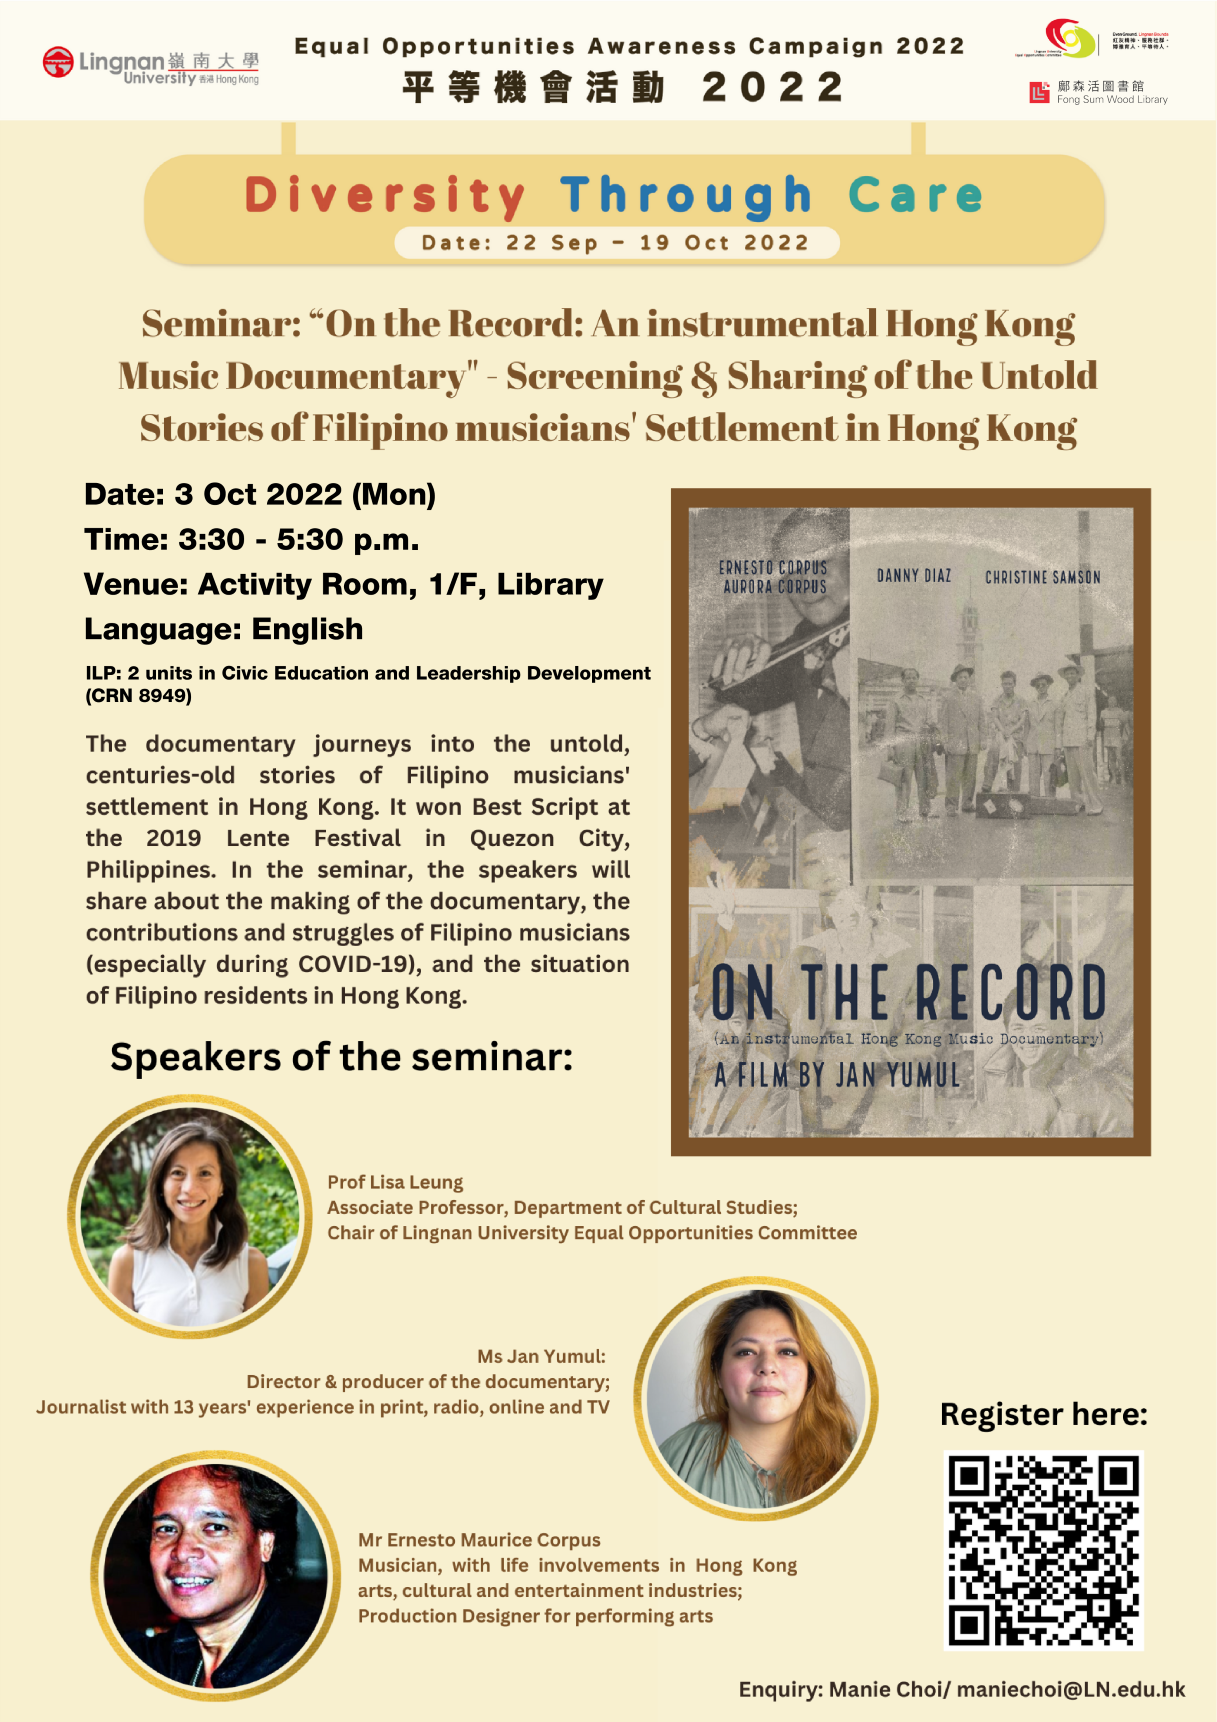 Seminar: “On the Record: An instrumental Hong Kong Music Documentary" Screening & Sharing of the Untold Stories of Filipino musicians' Settlement in Hong Kong